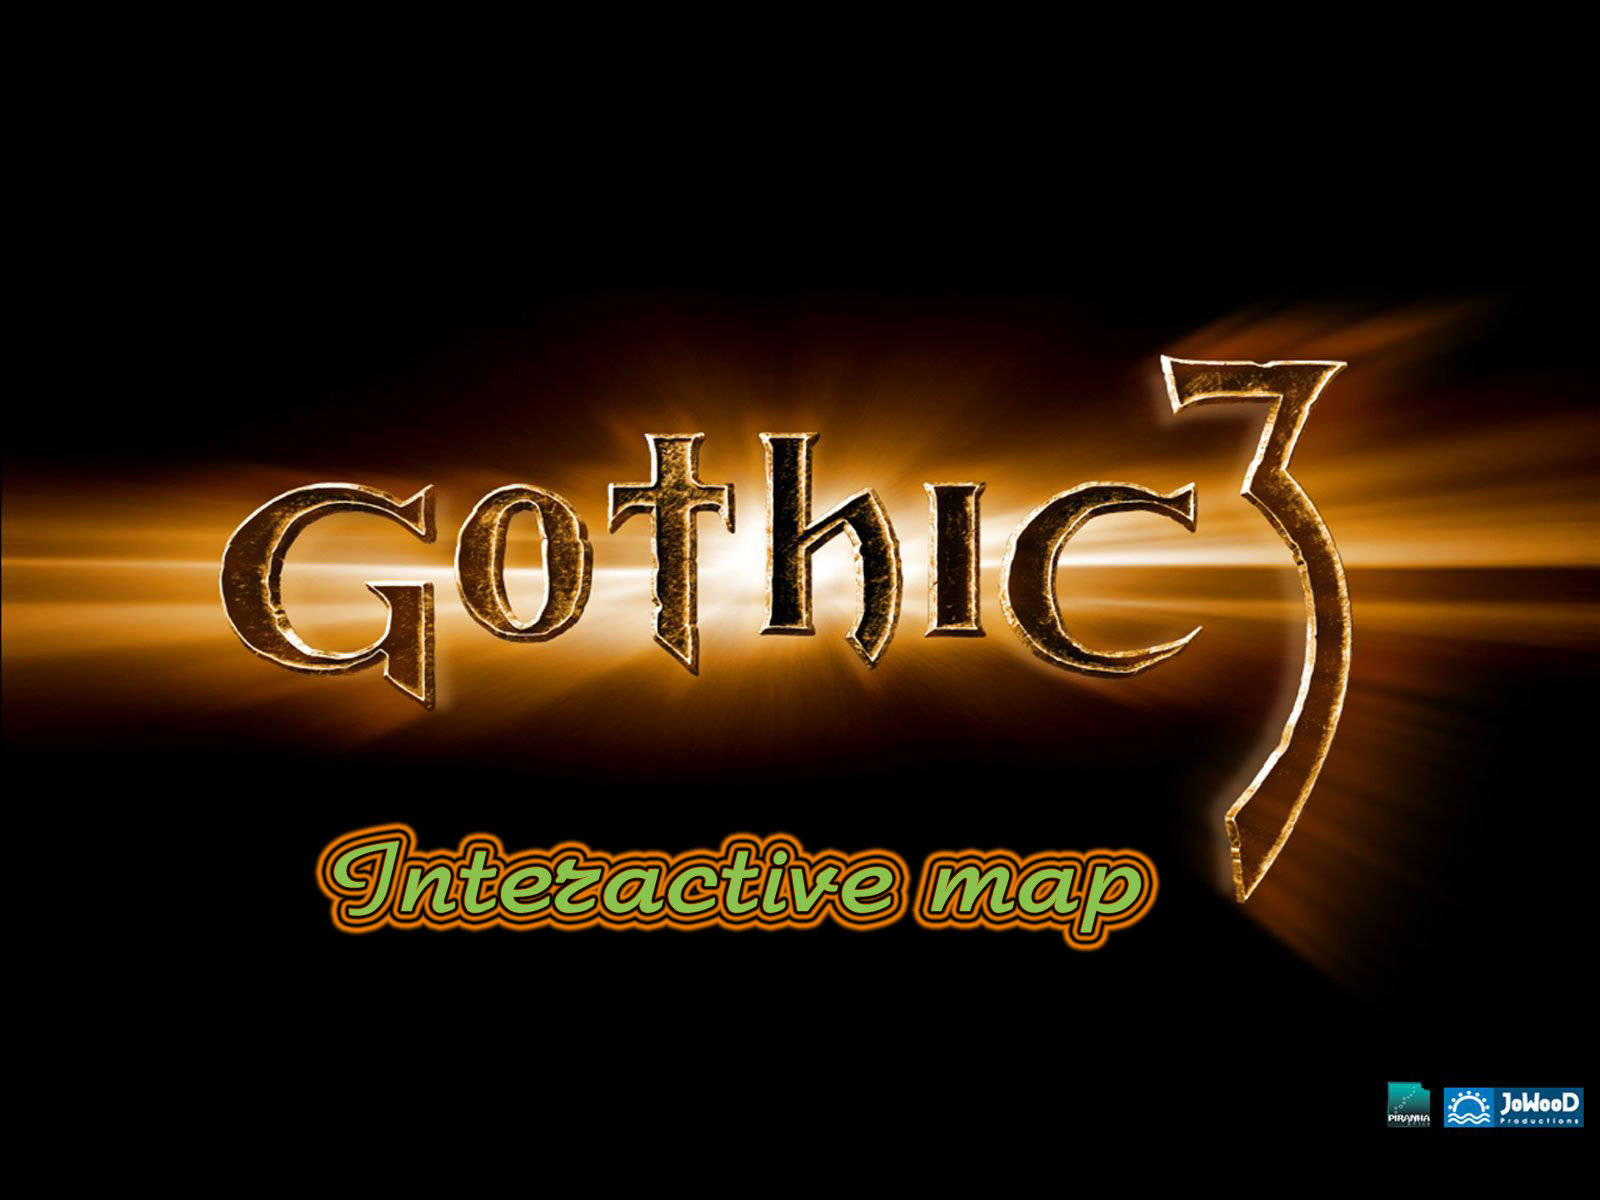 [Other] Gothic III interactive map (всё о Готике 3, привязаное к карте) v. 1.0.0 RC-29